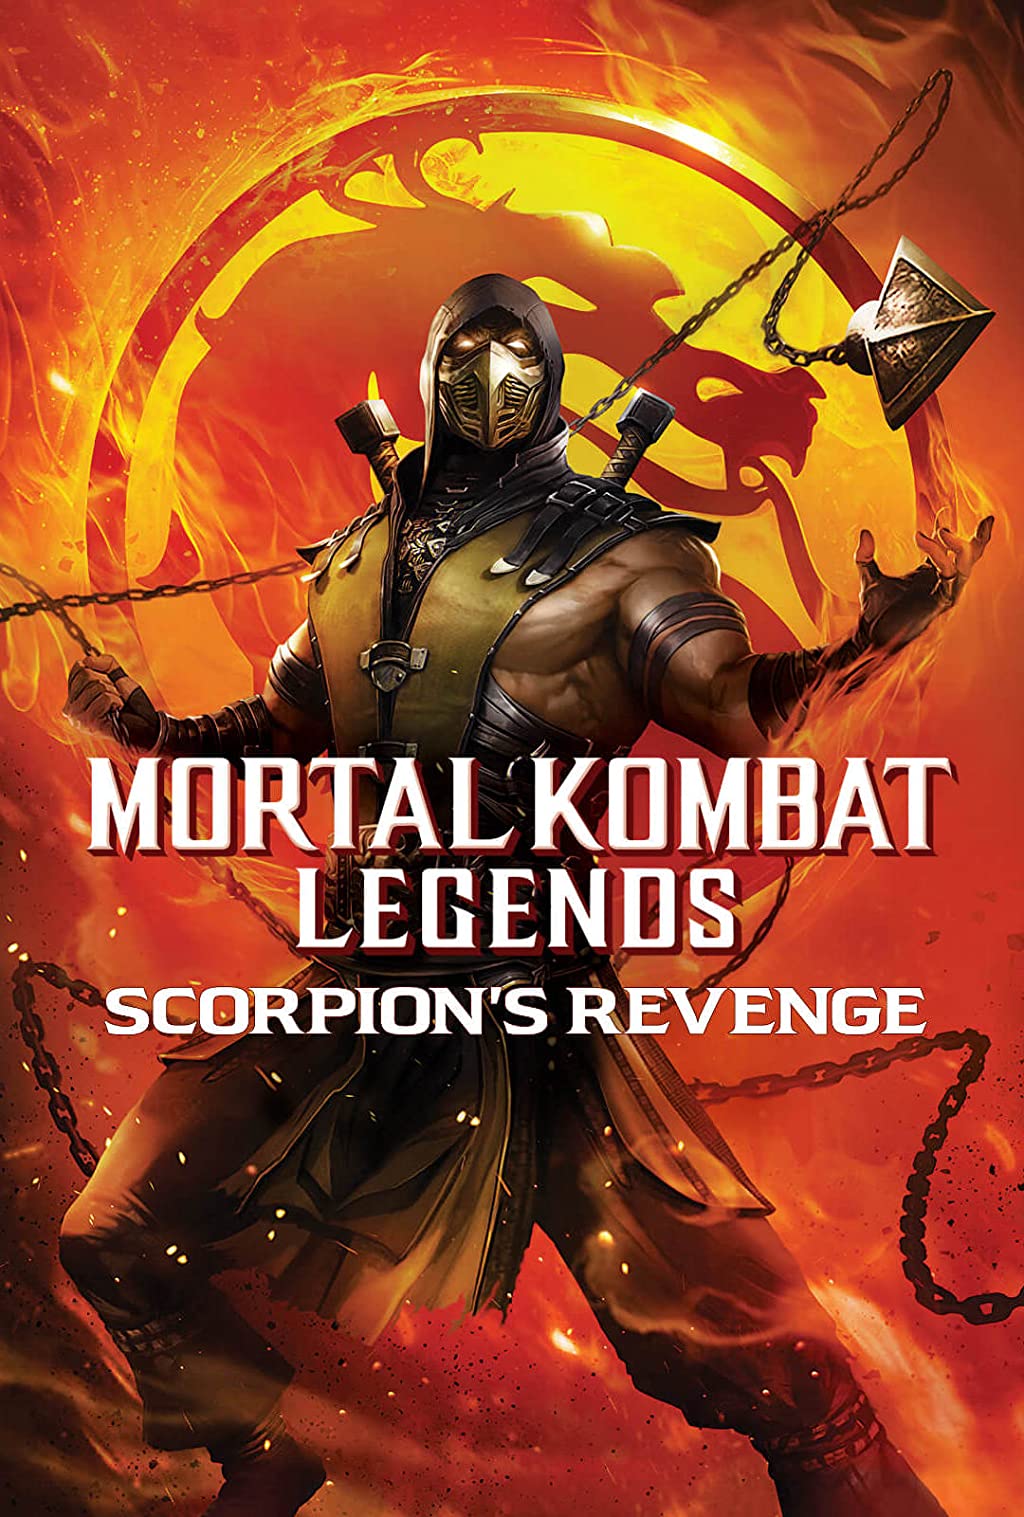 Mortal Kombat Legends: Scorpion's Revenge / Mortal Kombat Legends: Scorpion's Revenge (2020)